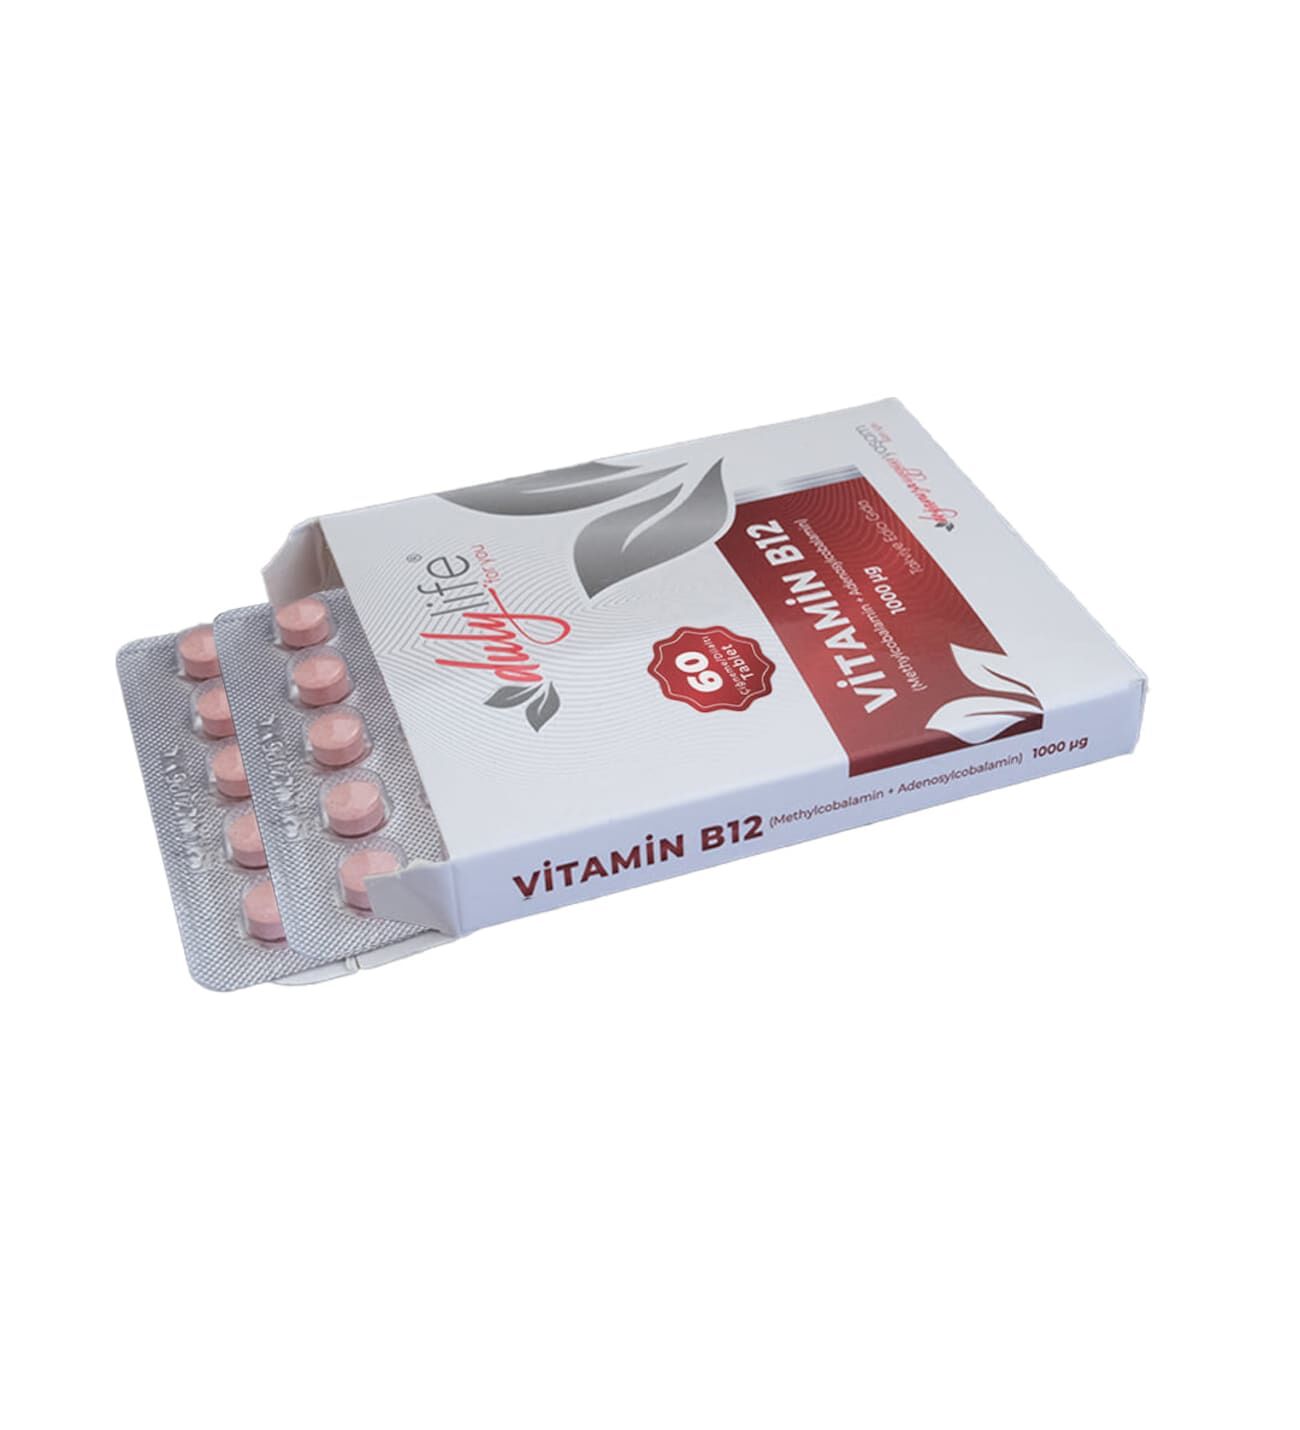 Dulylife Vitamin B12 Methylcobalamin Adenosylcobalamin 1000 mg 60 Çiğneme Dilaltı Tablet